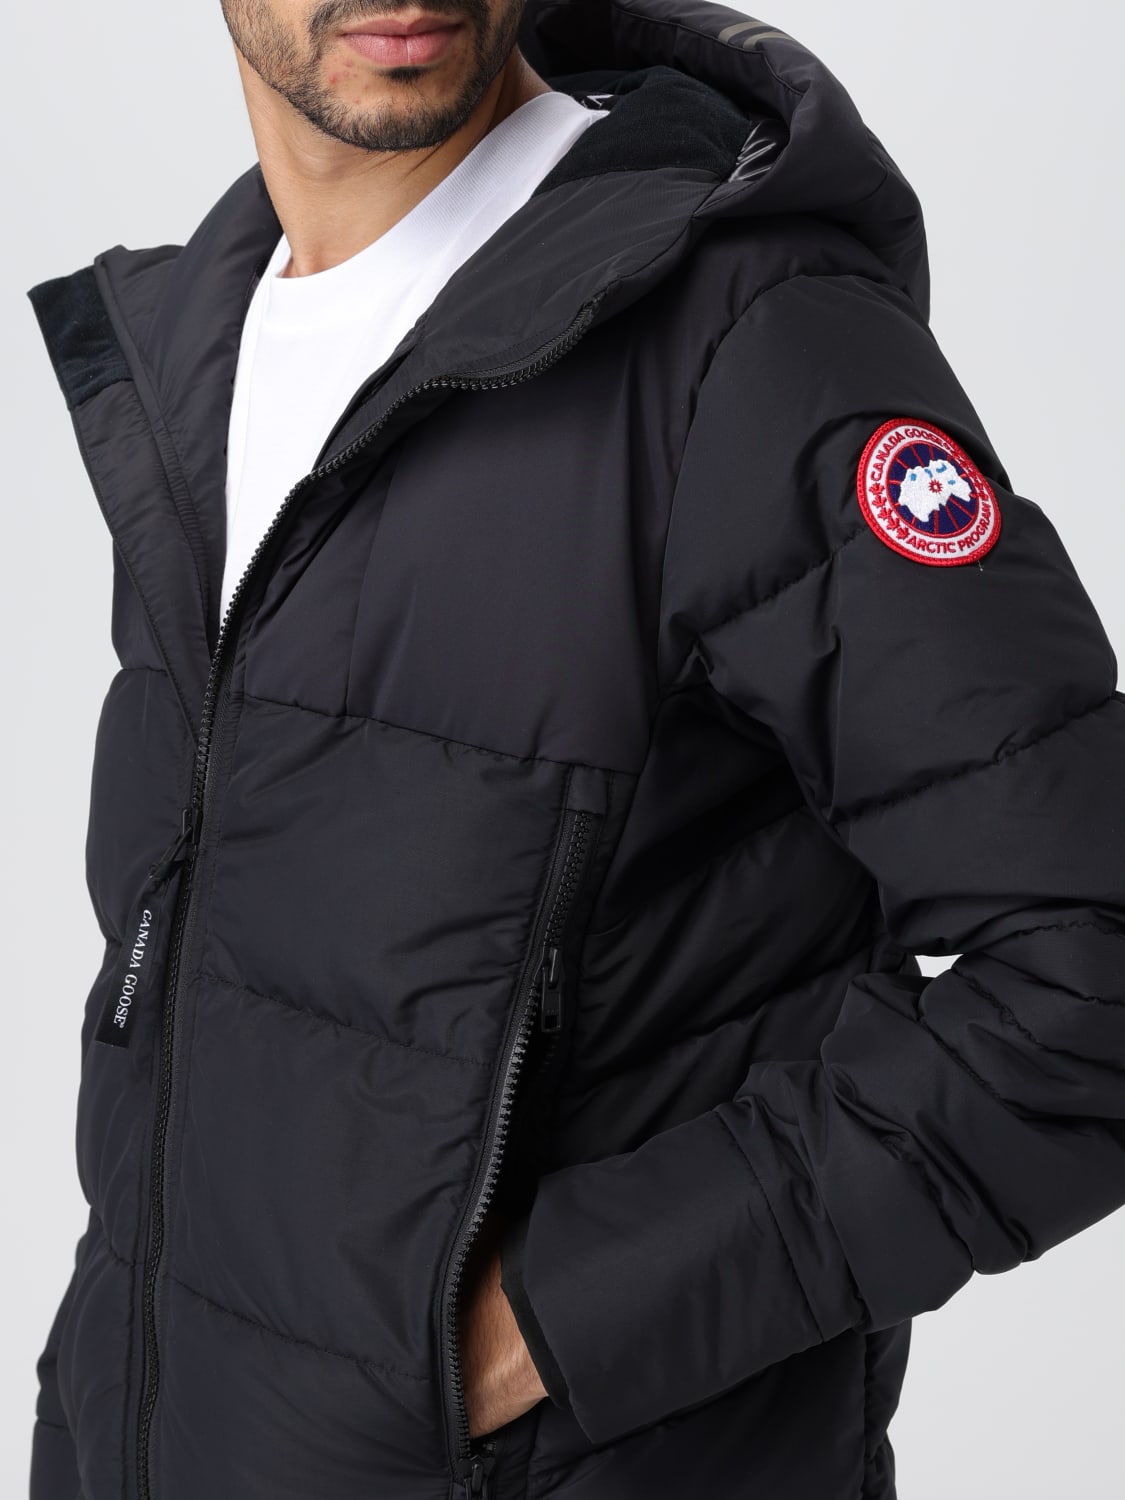 CANADA GOOSE: jacket for man - Black | Canada Goose jacket 2742M online ...